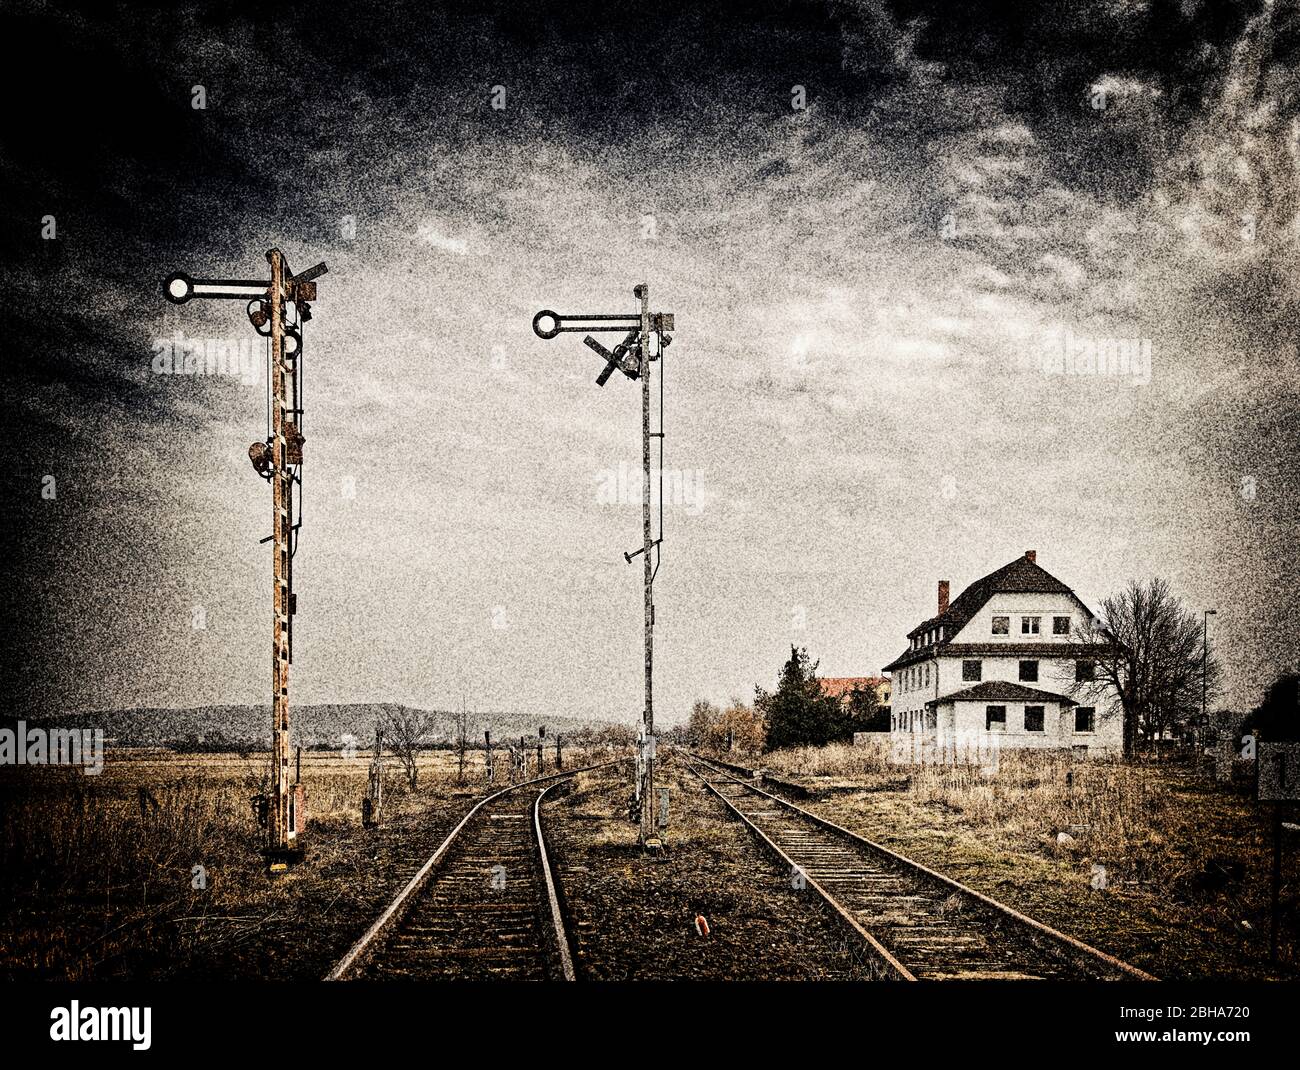 Tracks, signals out of service, platform, digitally processed, RailArt Stock Photo